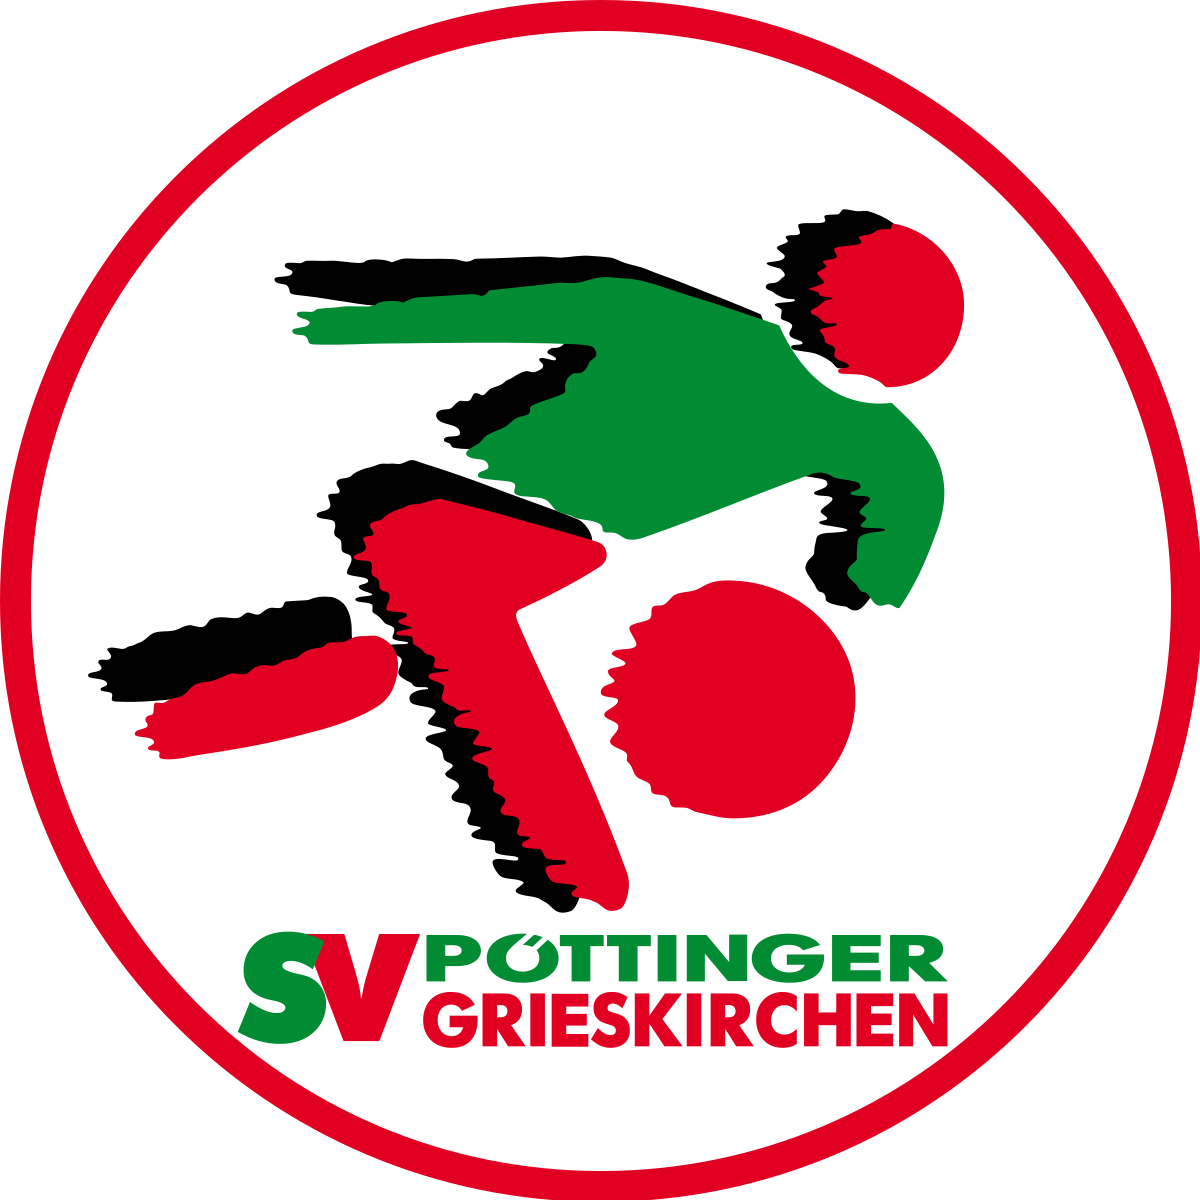 Grieskirchen logo